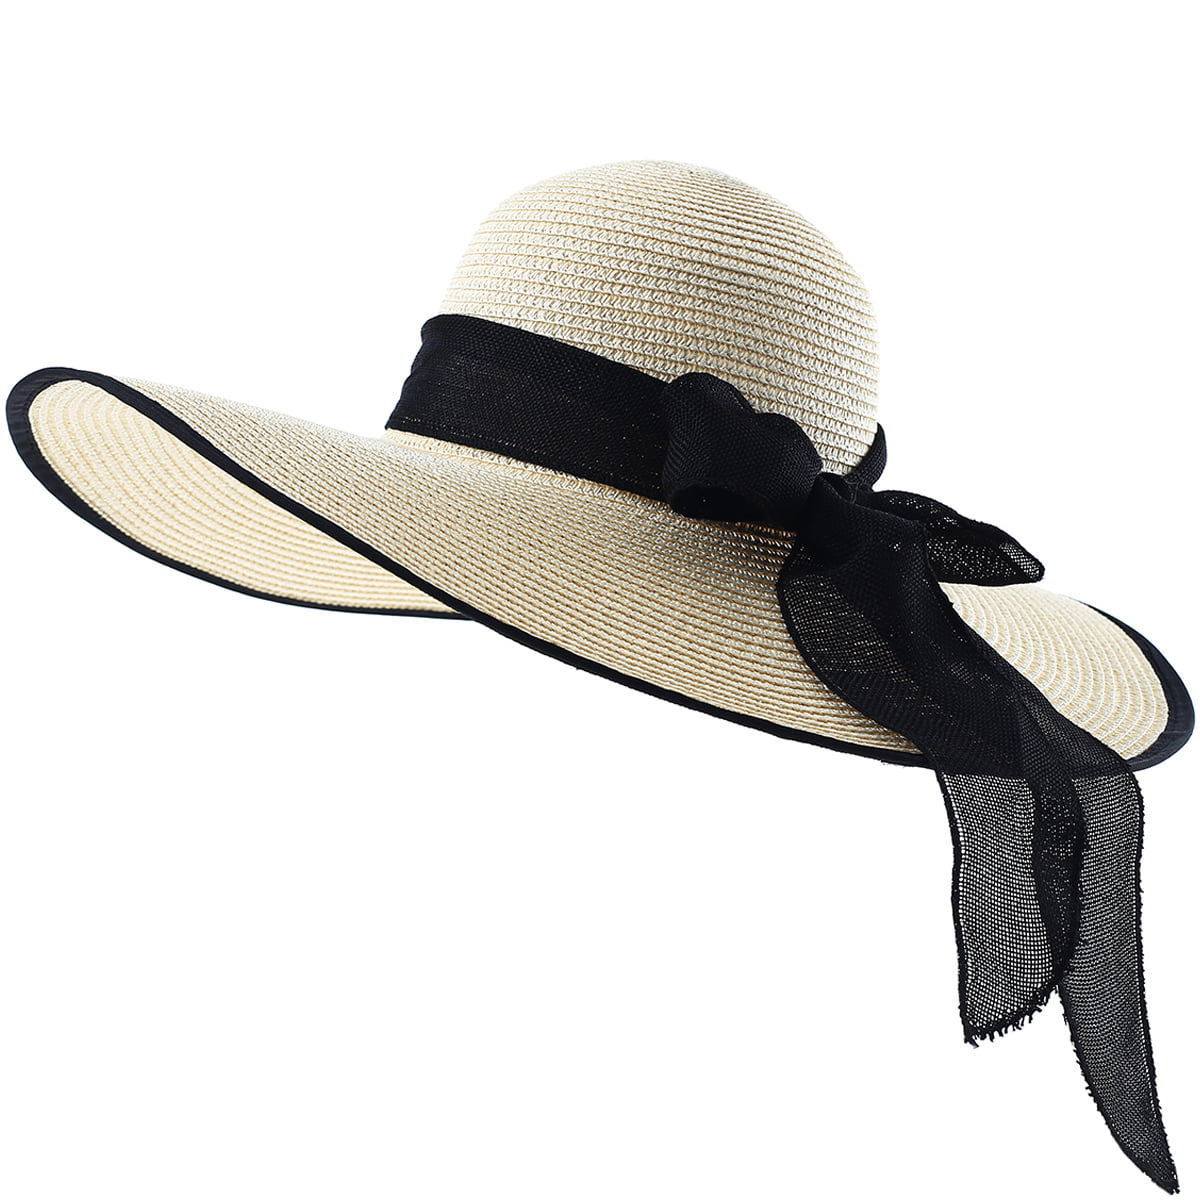 NRUTUP Women Colorful Big Brim Straw Bow Hat Sun Floppy Wide Brim Hats Beach Cap